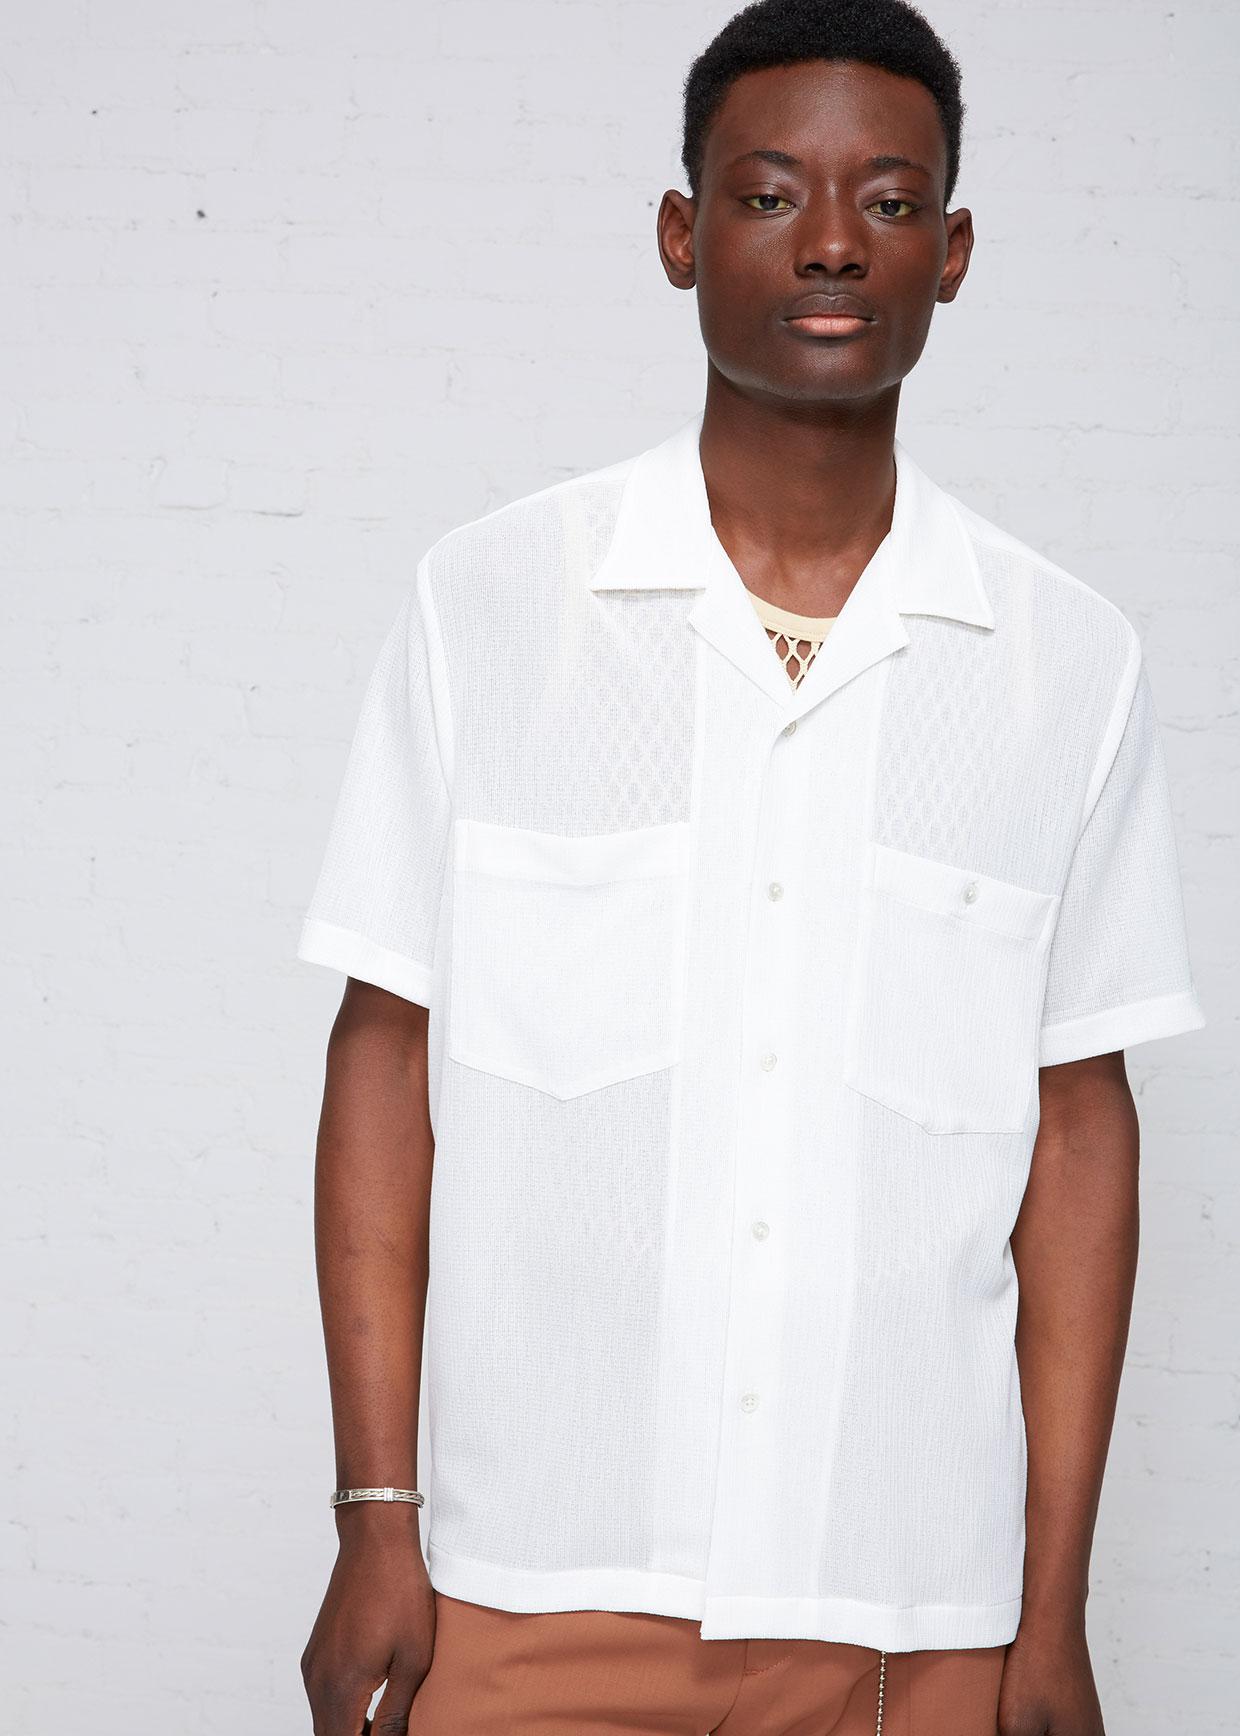 Cmmn Swdn Synthetic Dexter Open Collar Shirt In White For Men Lyst